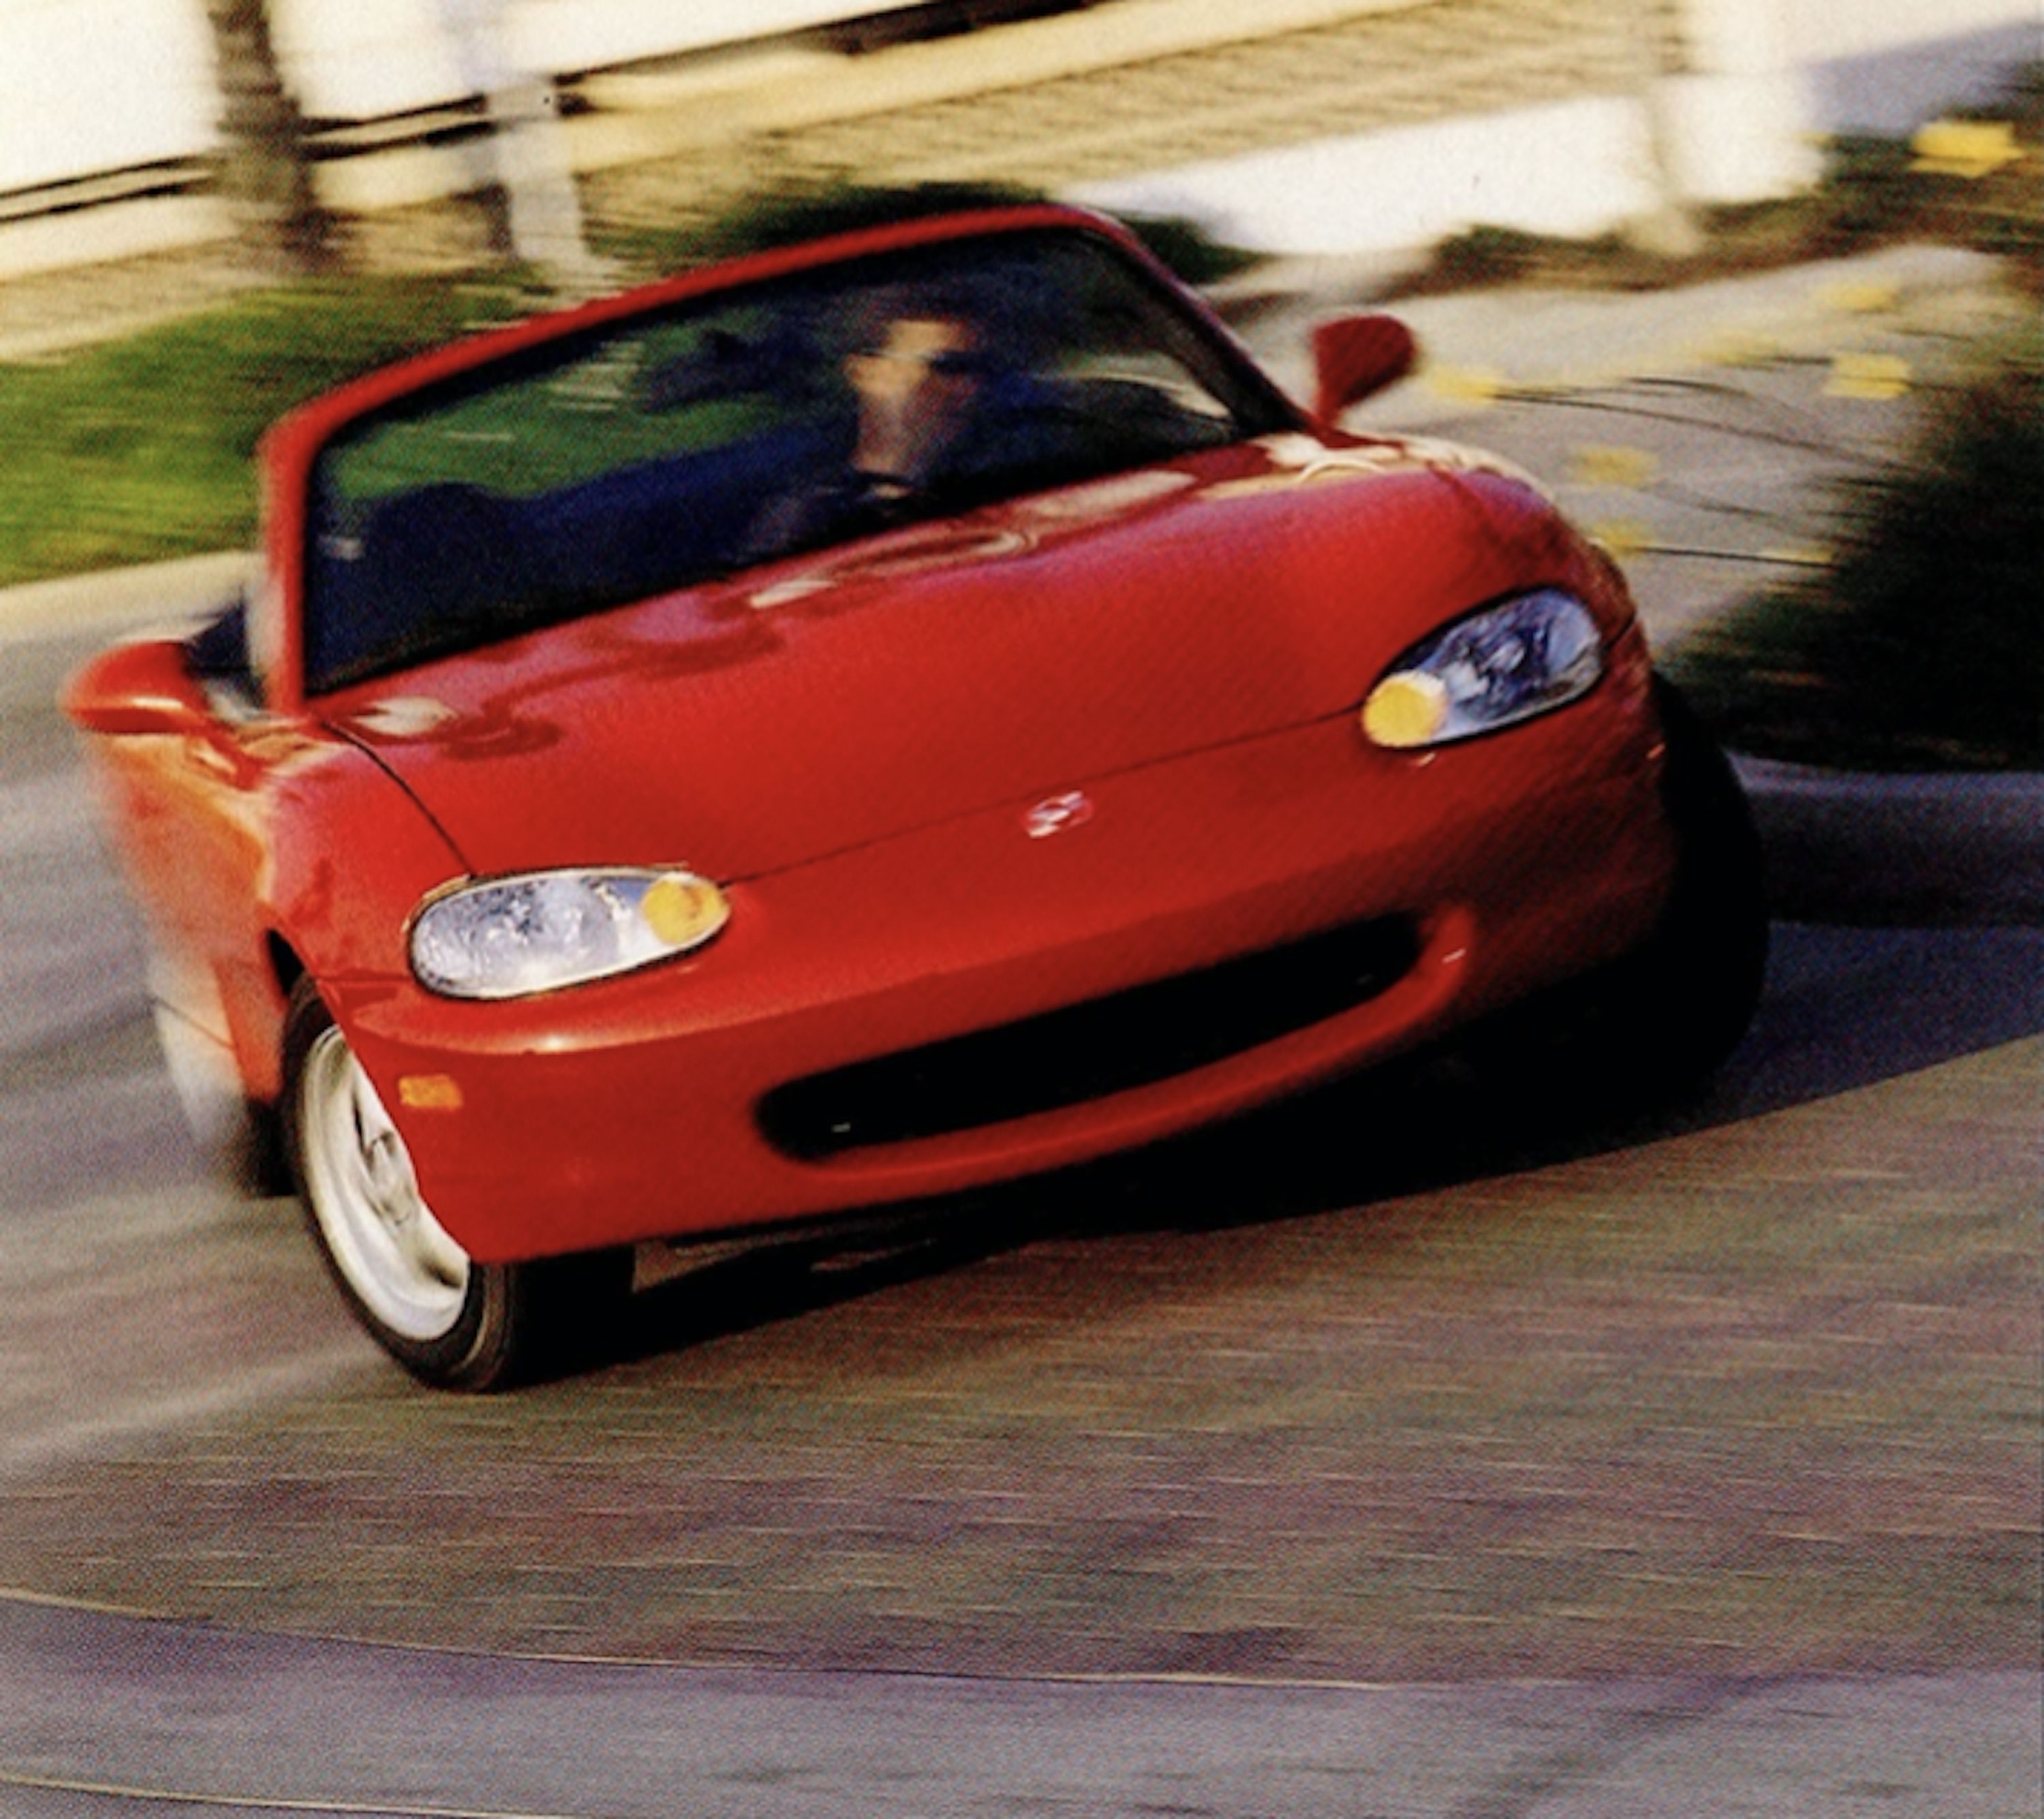 1999 Mazda Miata Review: Makes You Feel Like You're Falling in